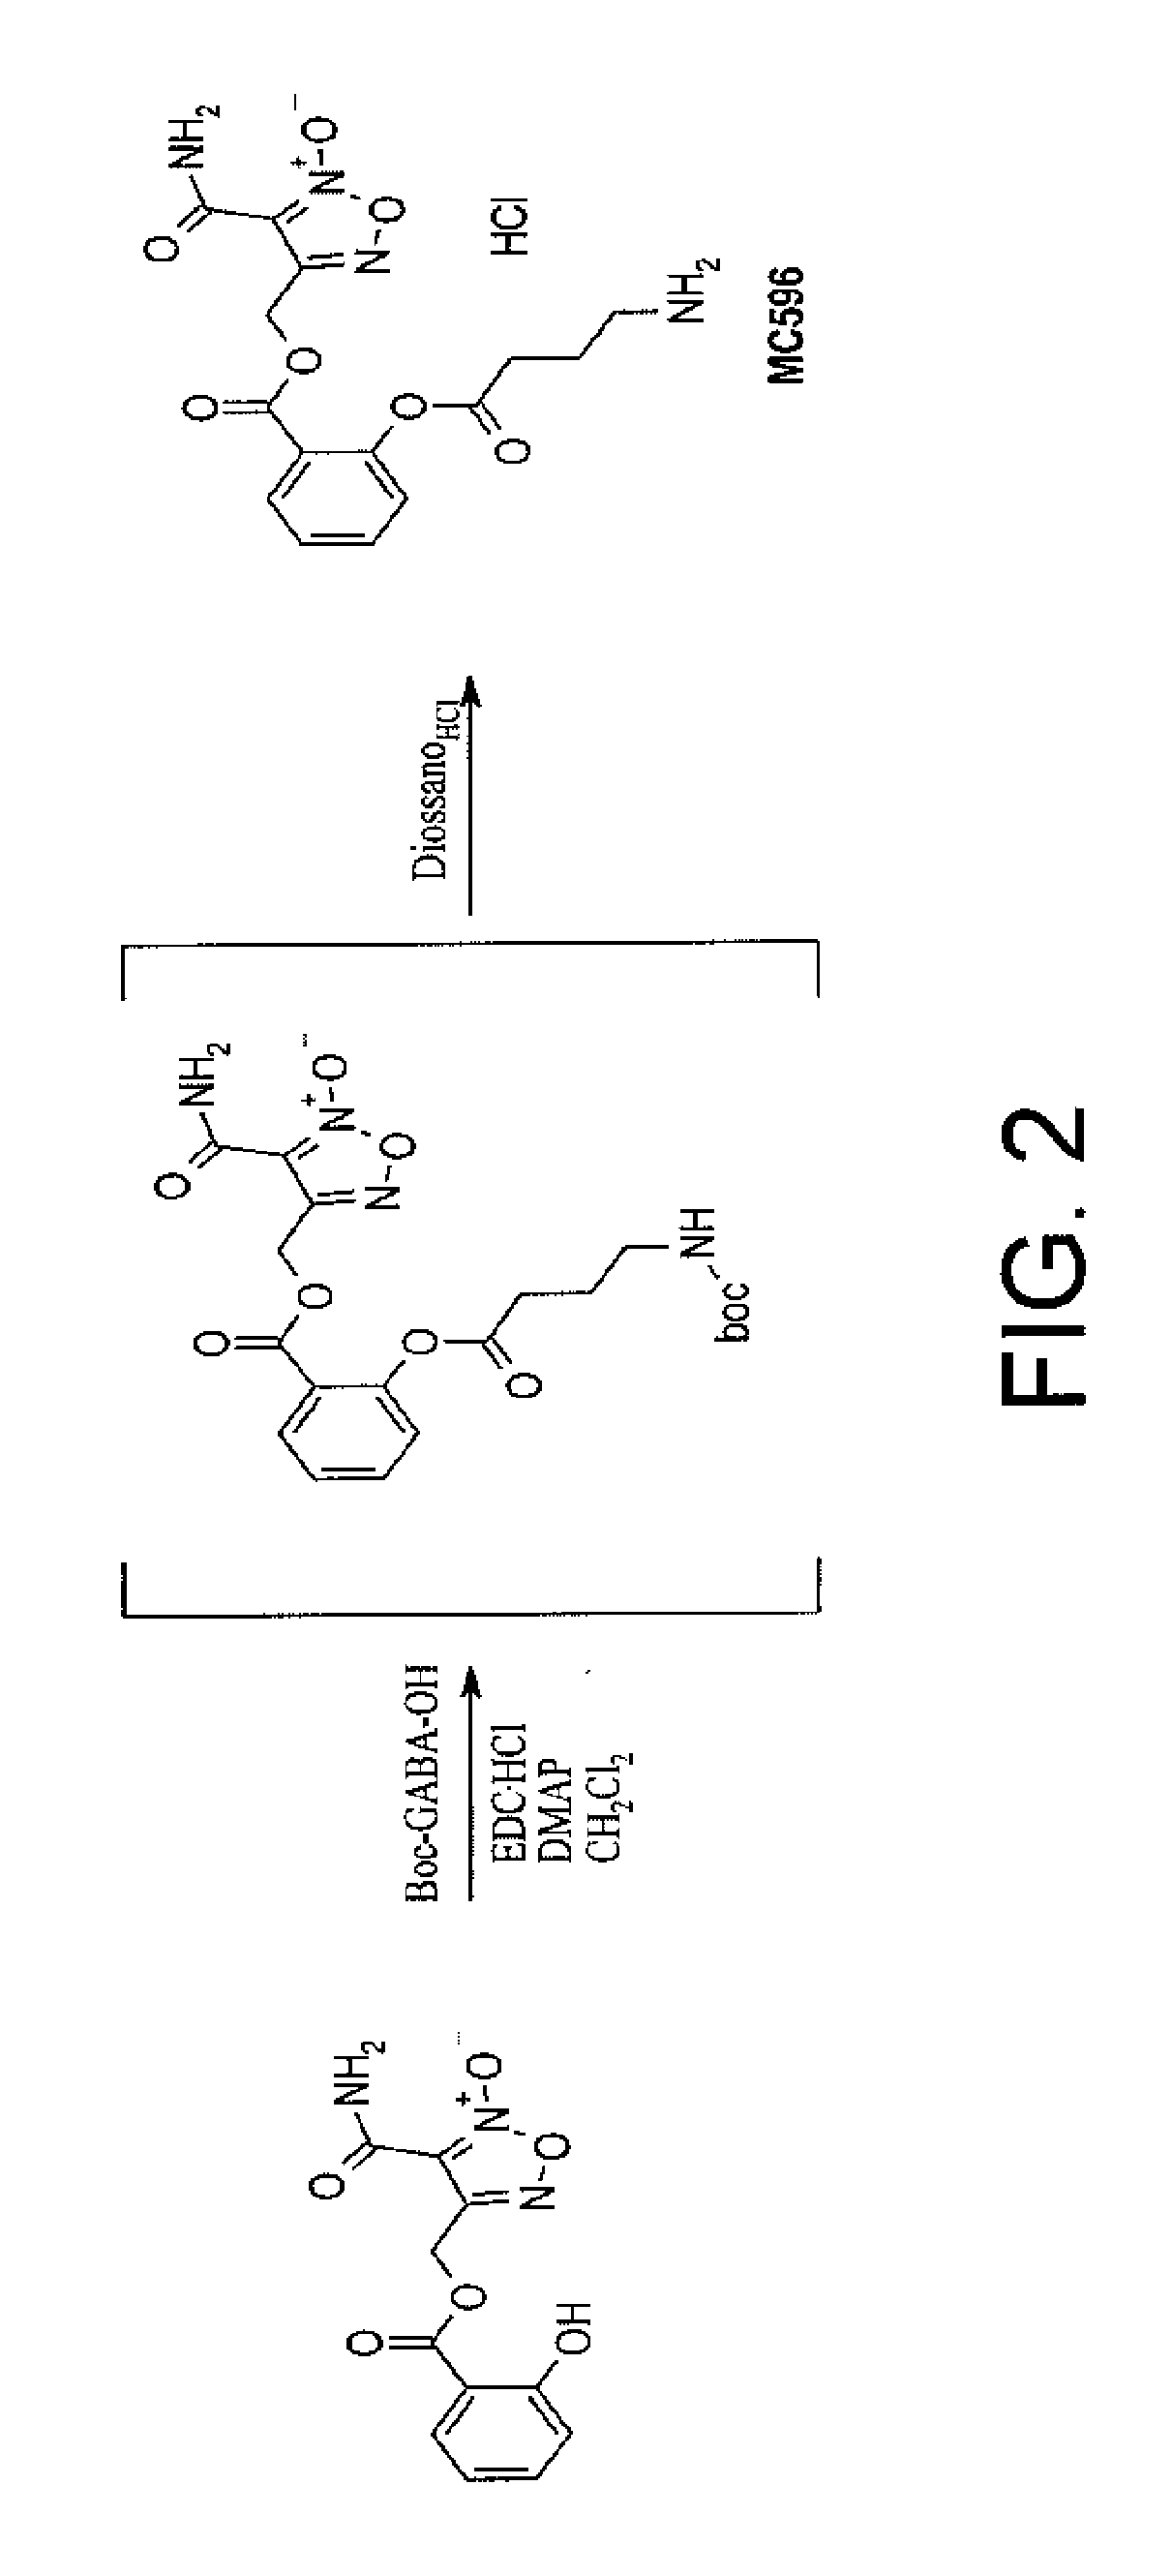 Novel water soluble furoxan derivatives having antitumor activity